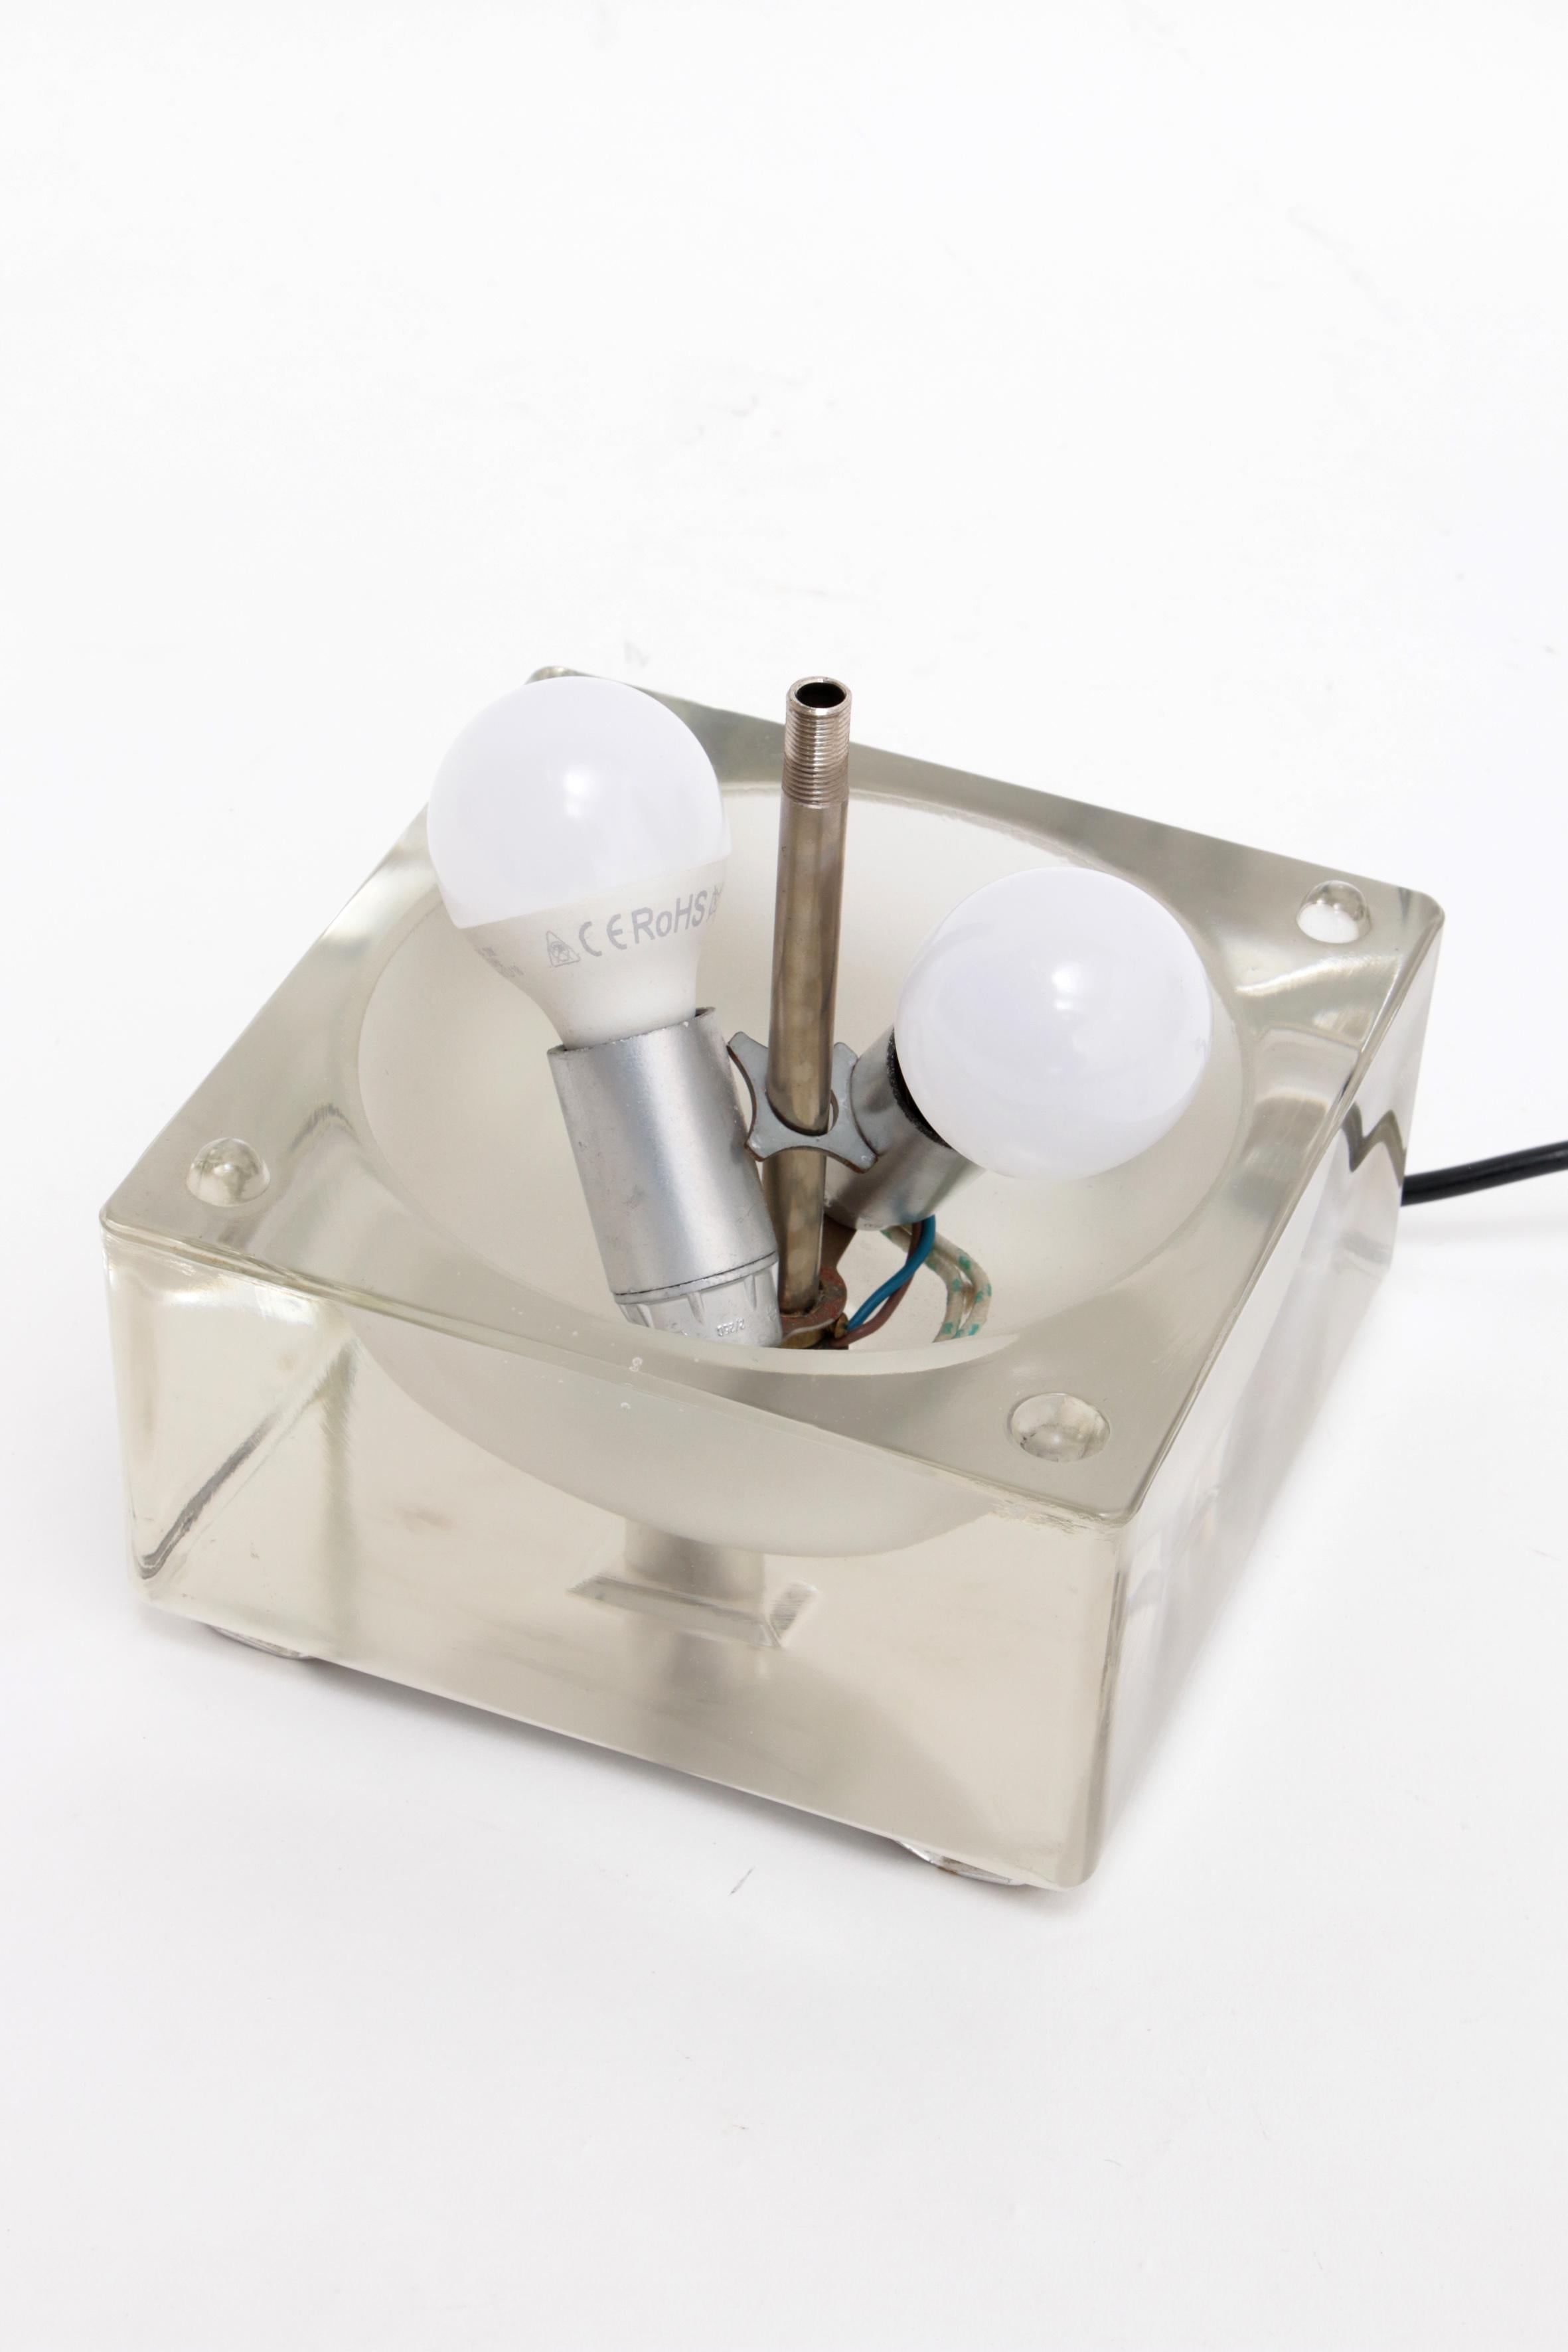 Alessandro Mendini “Cubosfera” Table Lamp Metal Crome Glass 1968 Italy 5